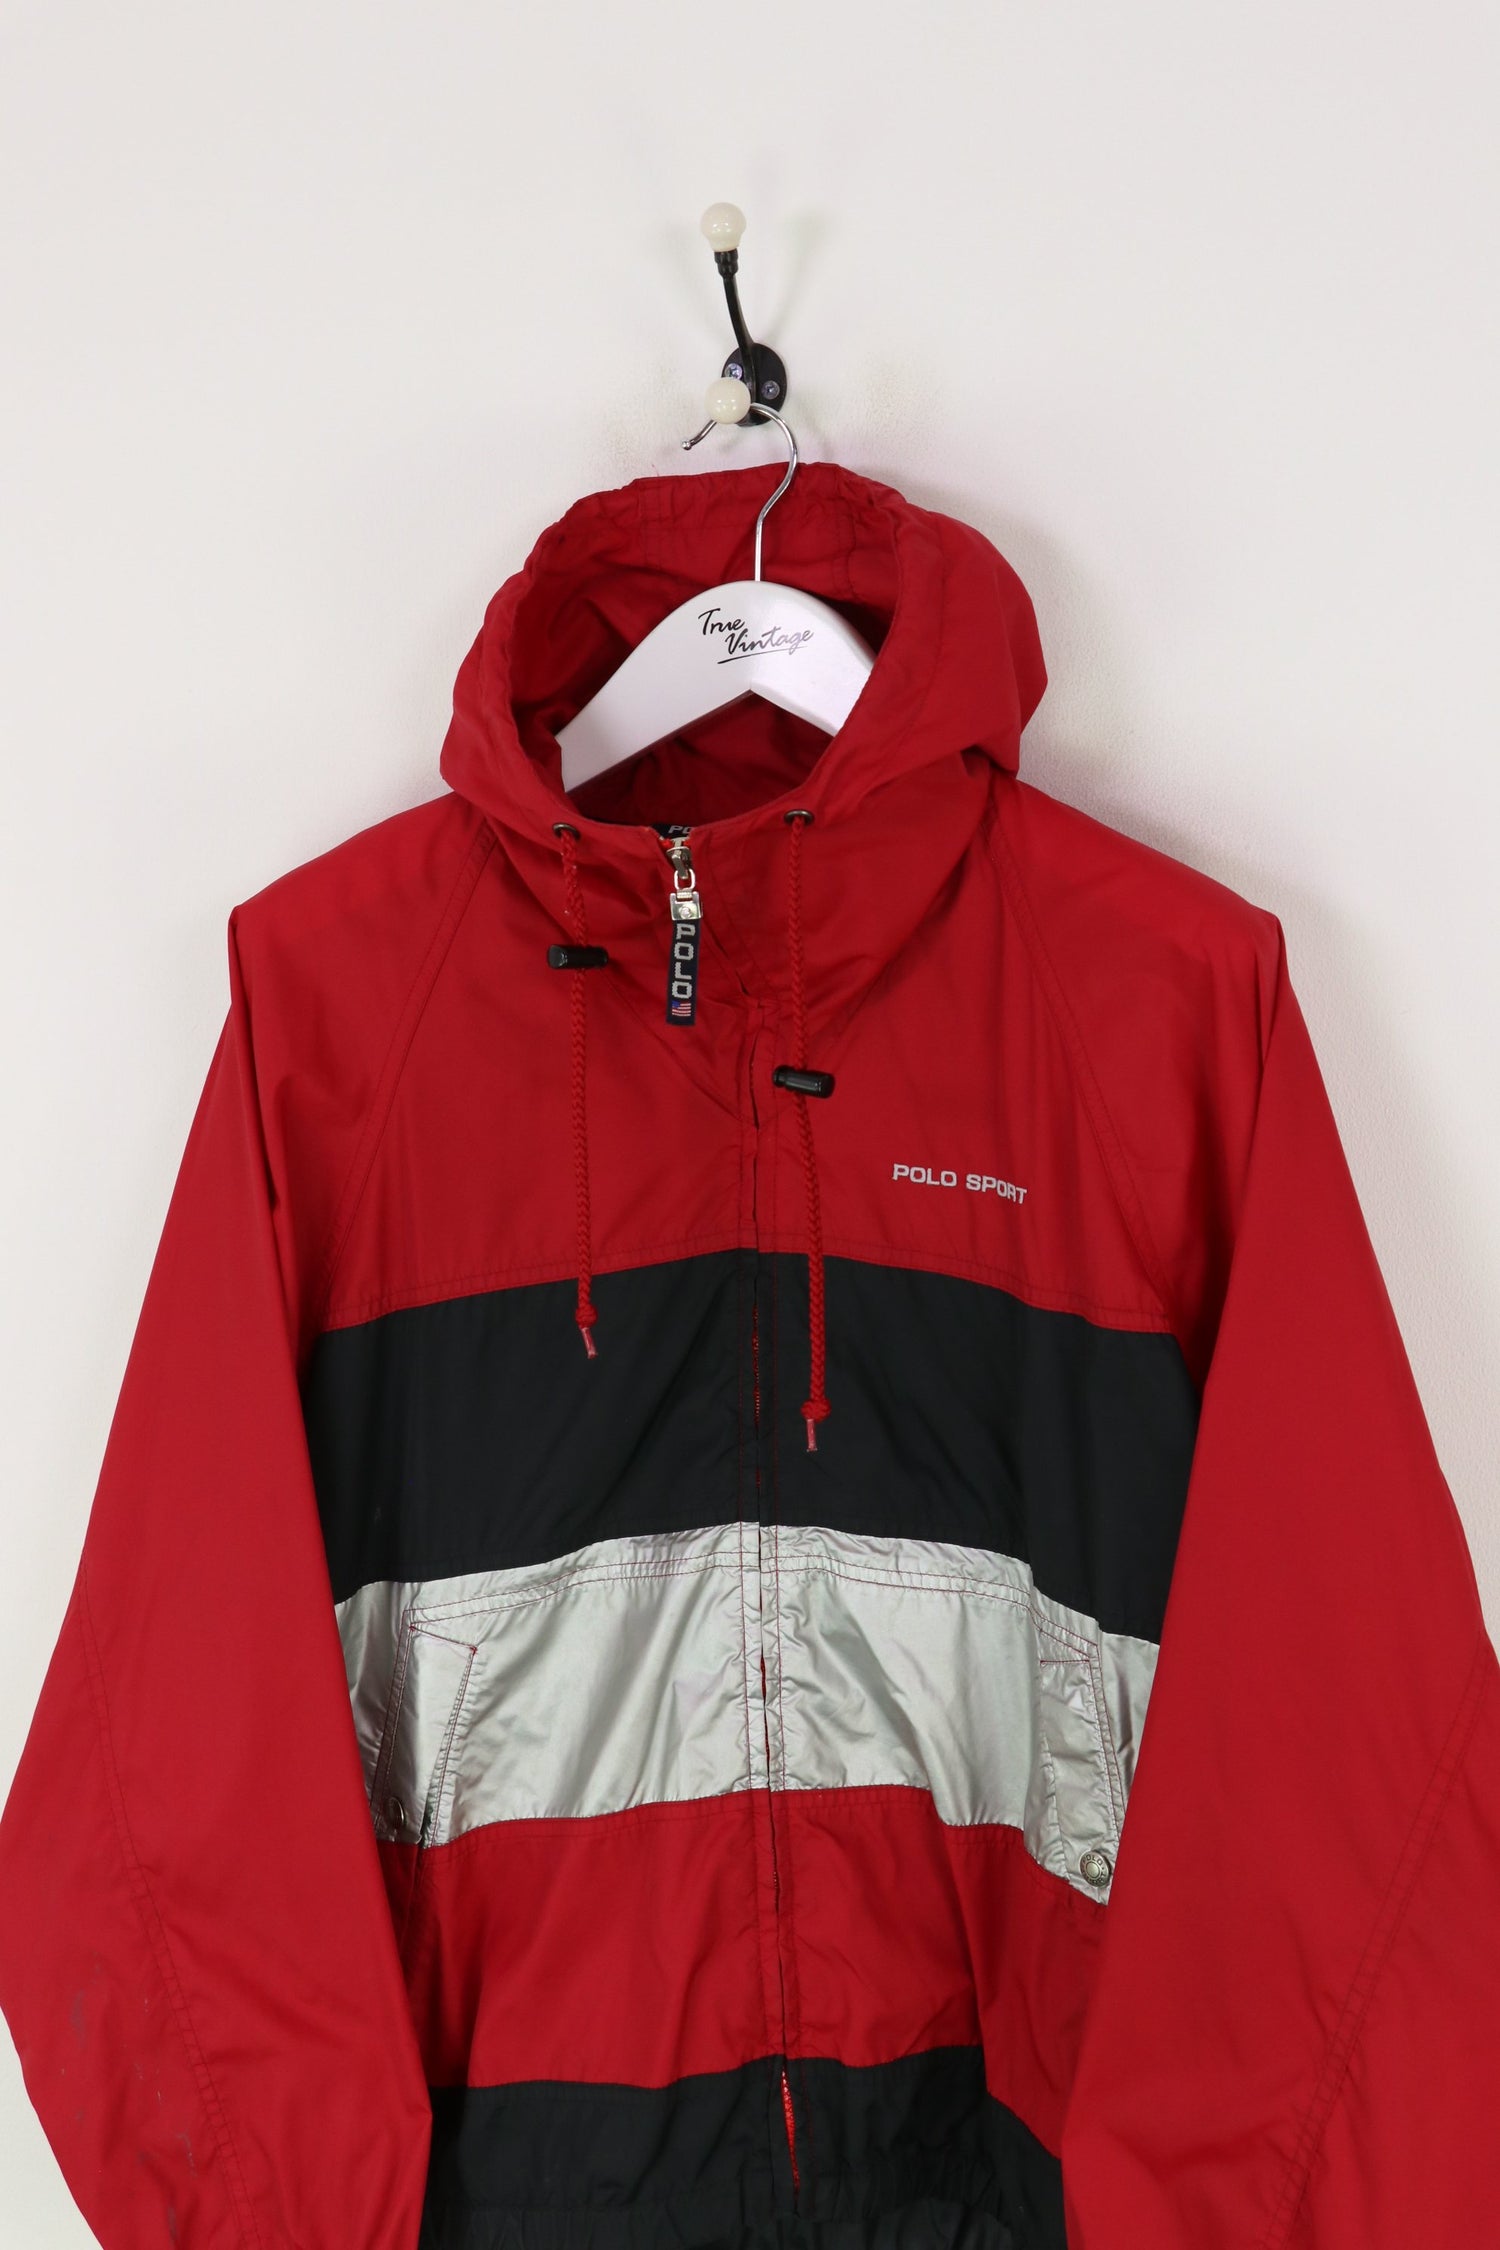 Polo Sport Windbreaker Jacket Red/Black/Silver Medium